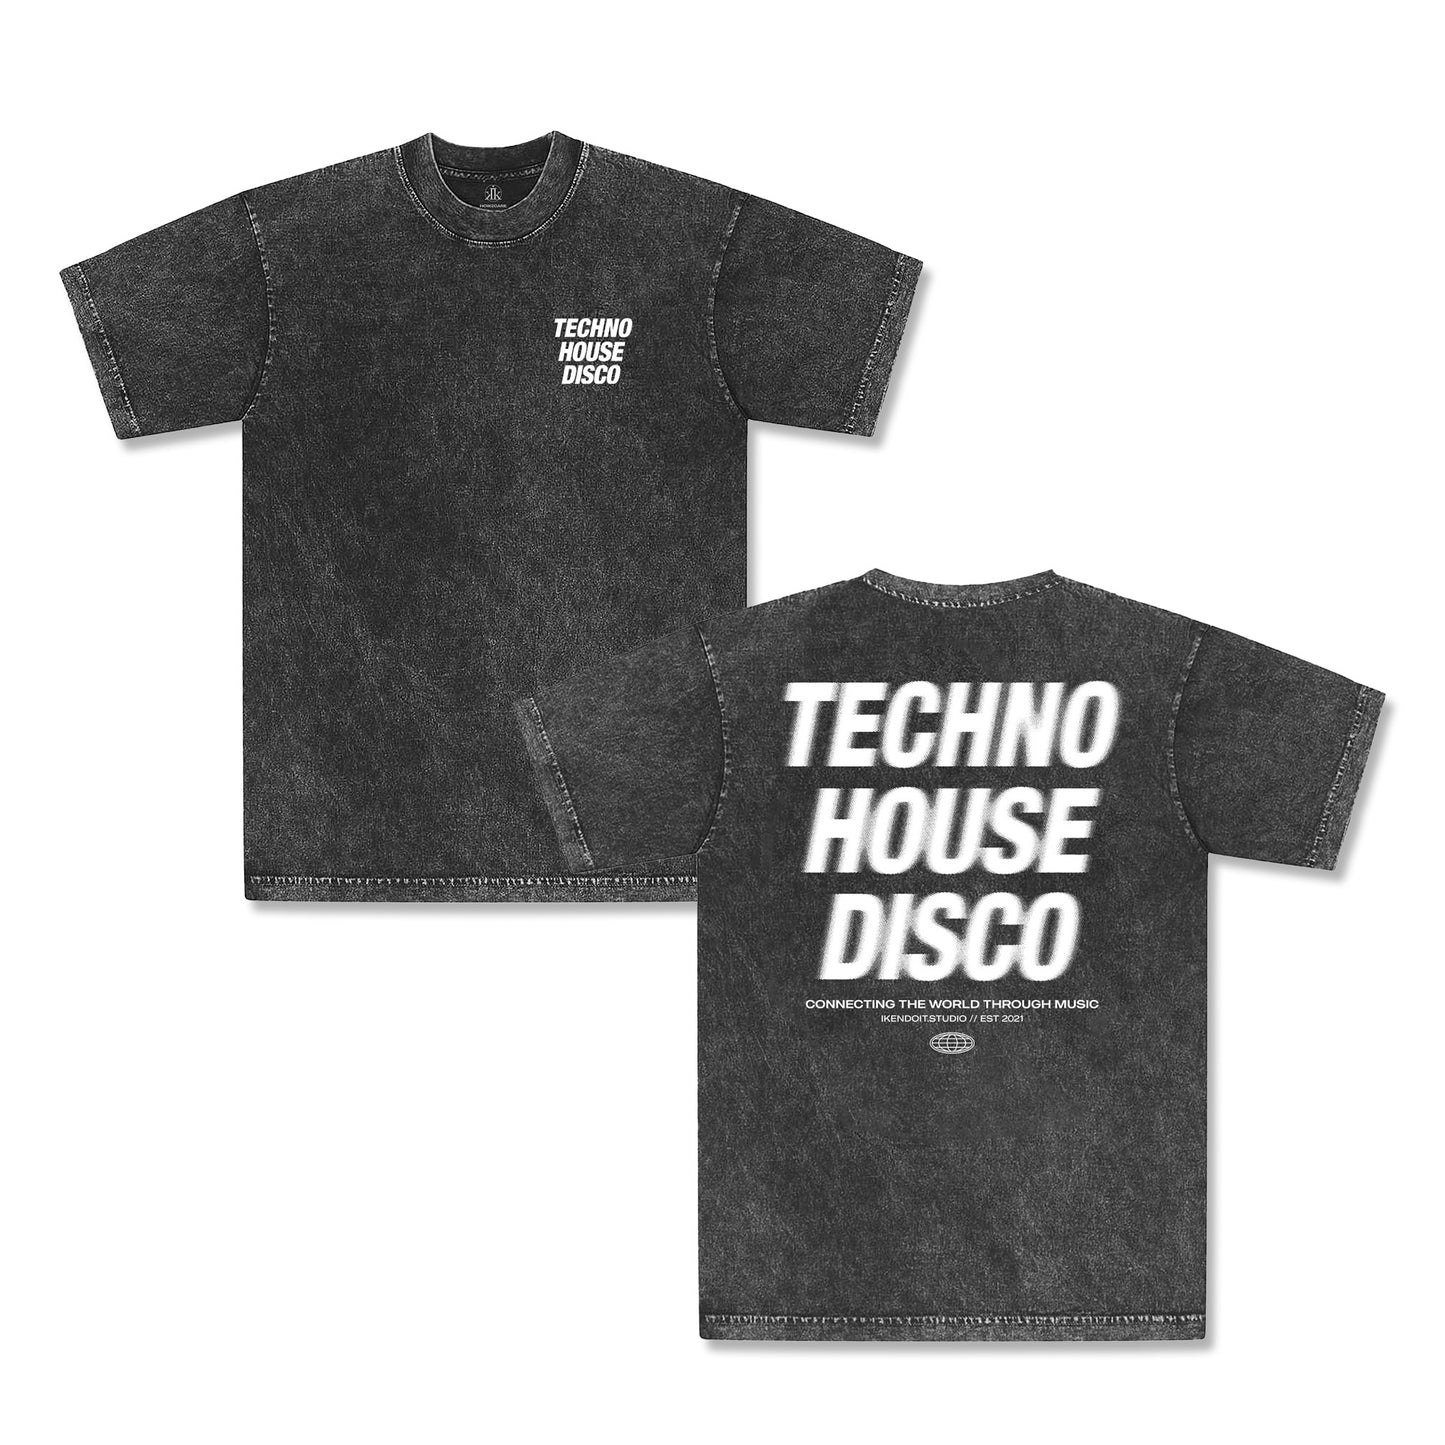 Techno x House x Disco Tee / Carbon Black - IKendoit.Shop